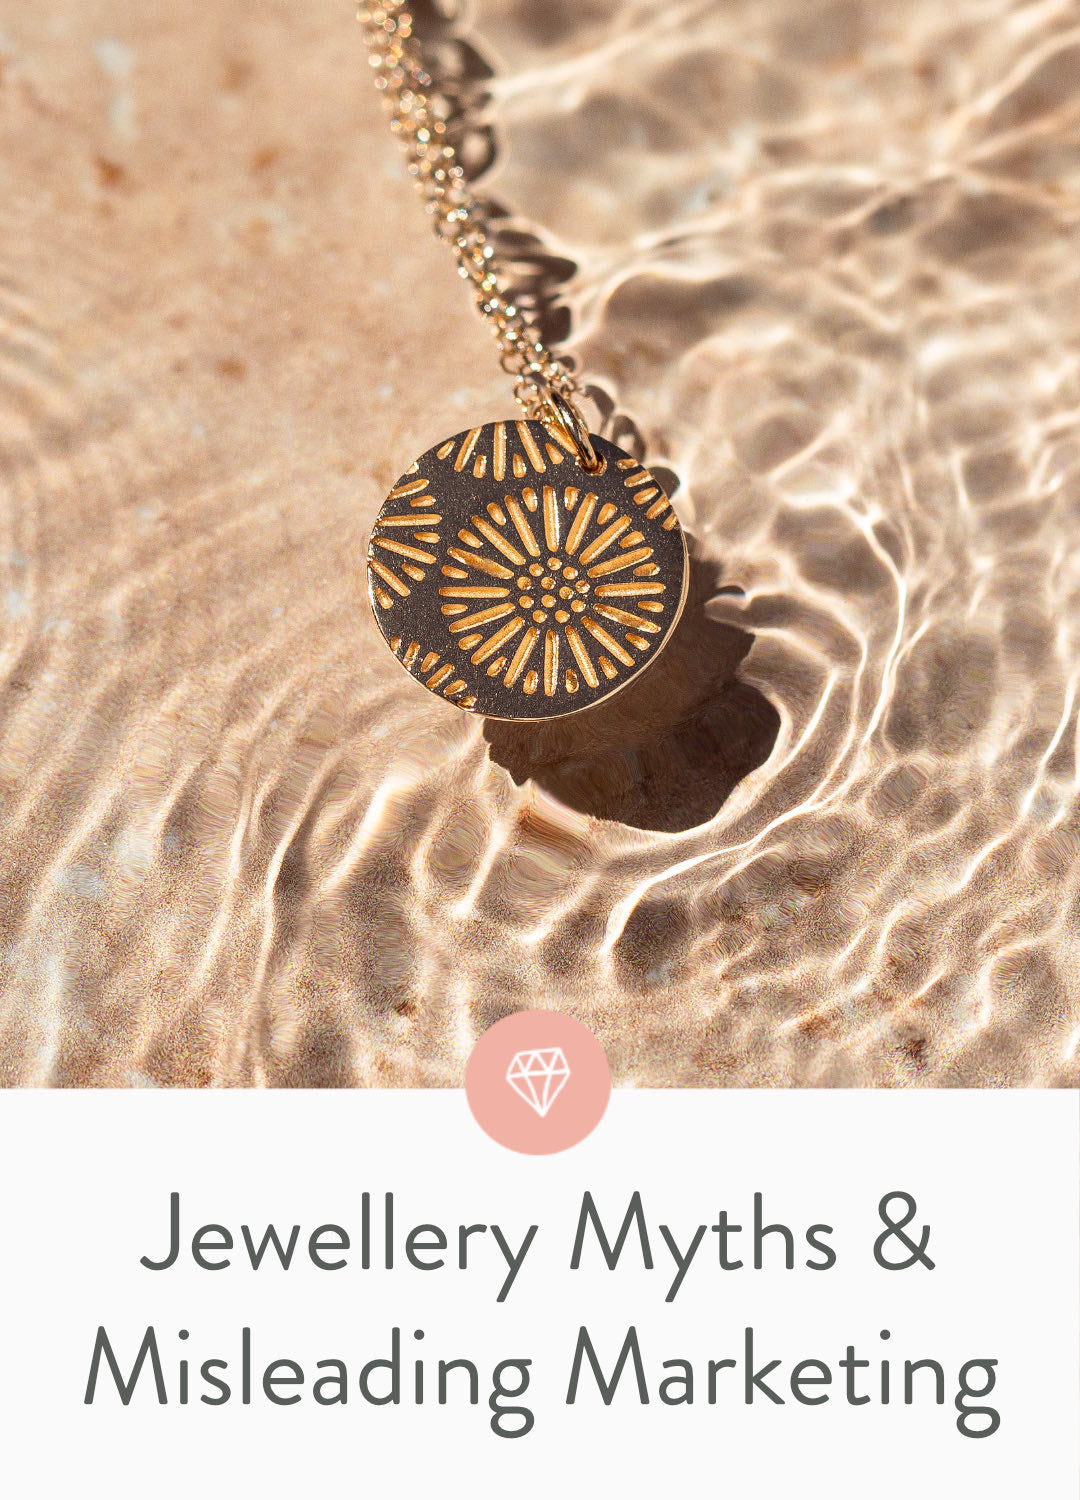 Jewellery myths: hypoallergenic, waterproof, sweatproof and more